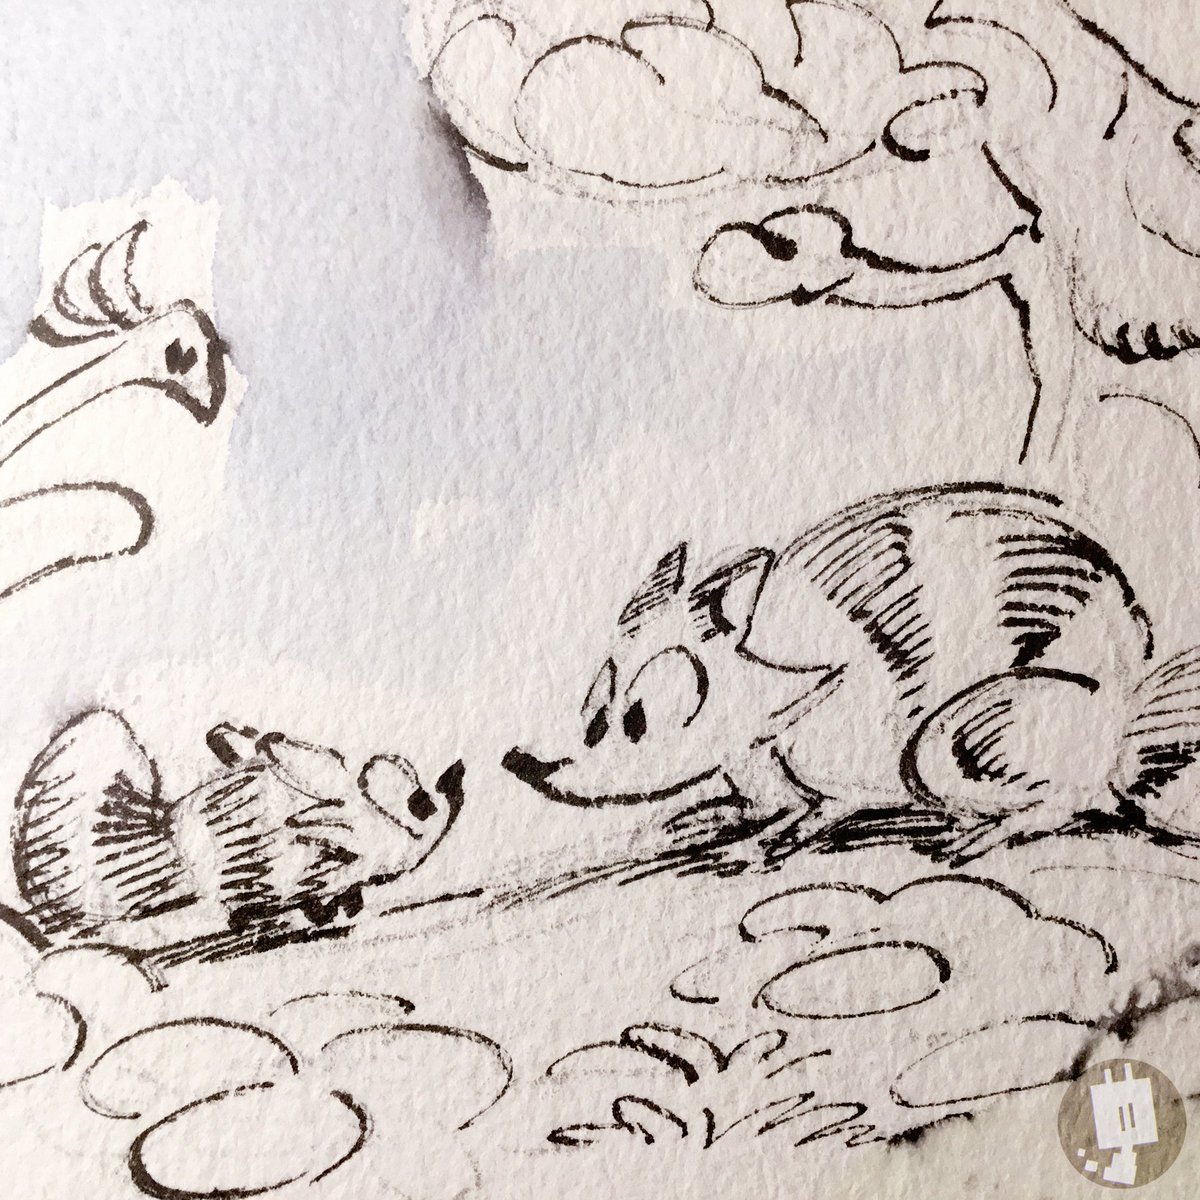 ✧  Raccoons ✧
▪
instagram.com/pixi_gags/
▪
#ink #pensketch #racoon #art #illustration #design #animation #illustrationartists #pixigags